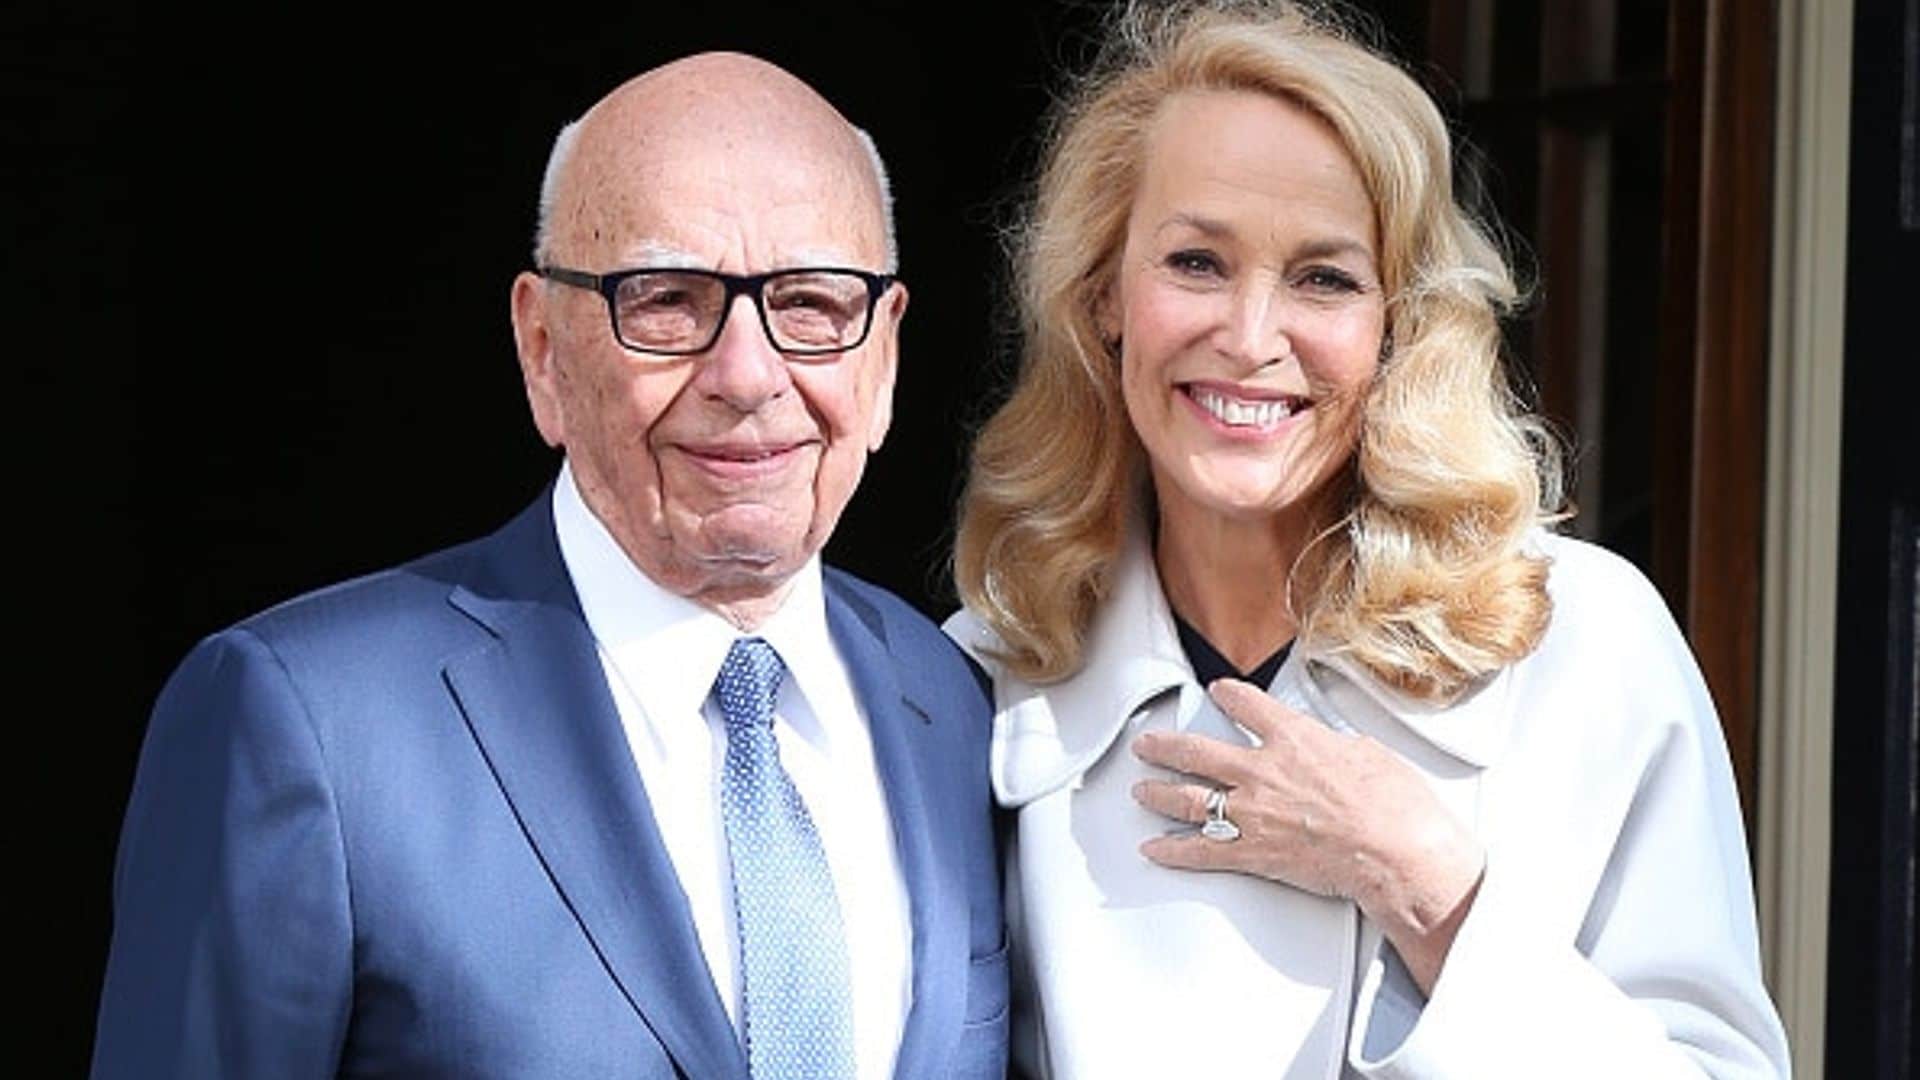 Rupert Murdoch and Jerry Hall: Their love story